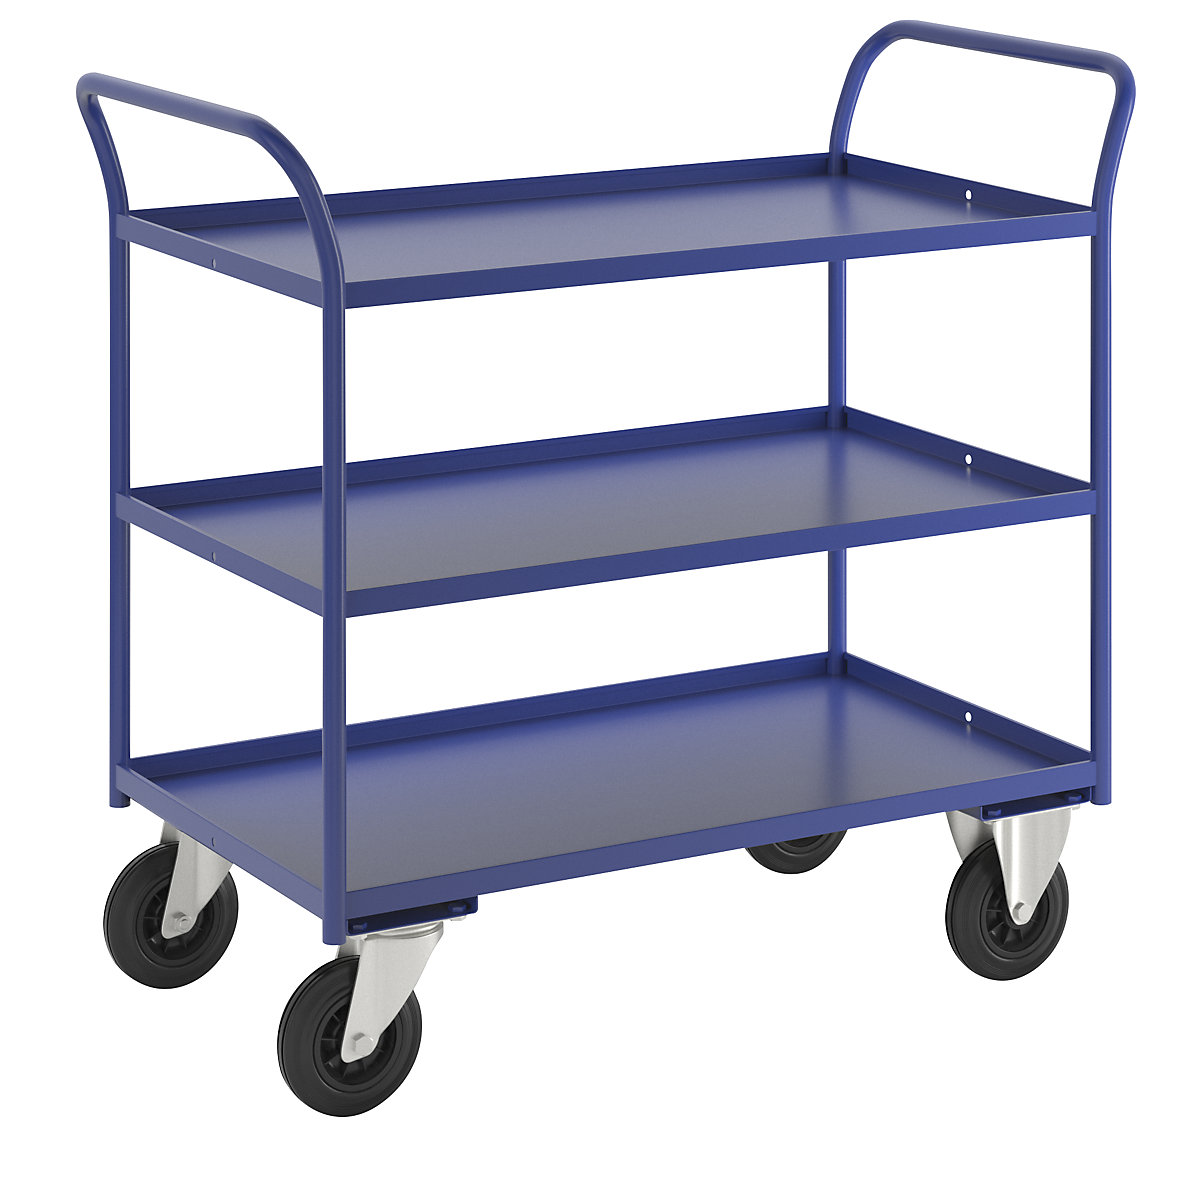 KM41 table trolley – Kongamek, 3 shelves with raised edges, LxWxH 1070 x 550 x 1000 mm, blue, 2 swivel castors and 2 fixed castors-1